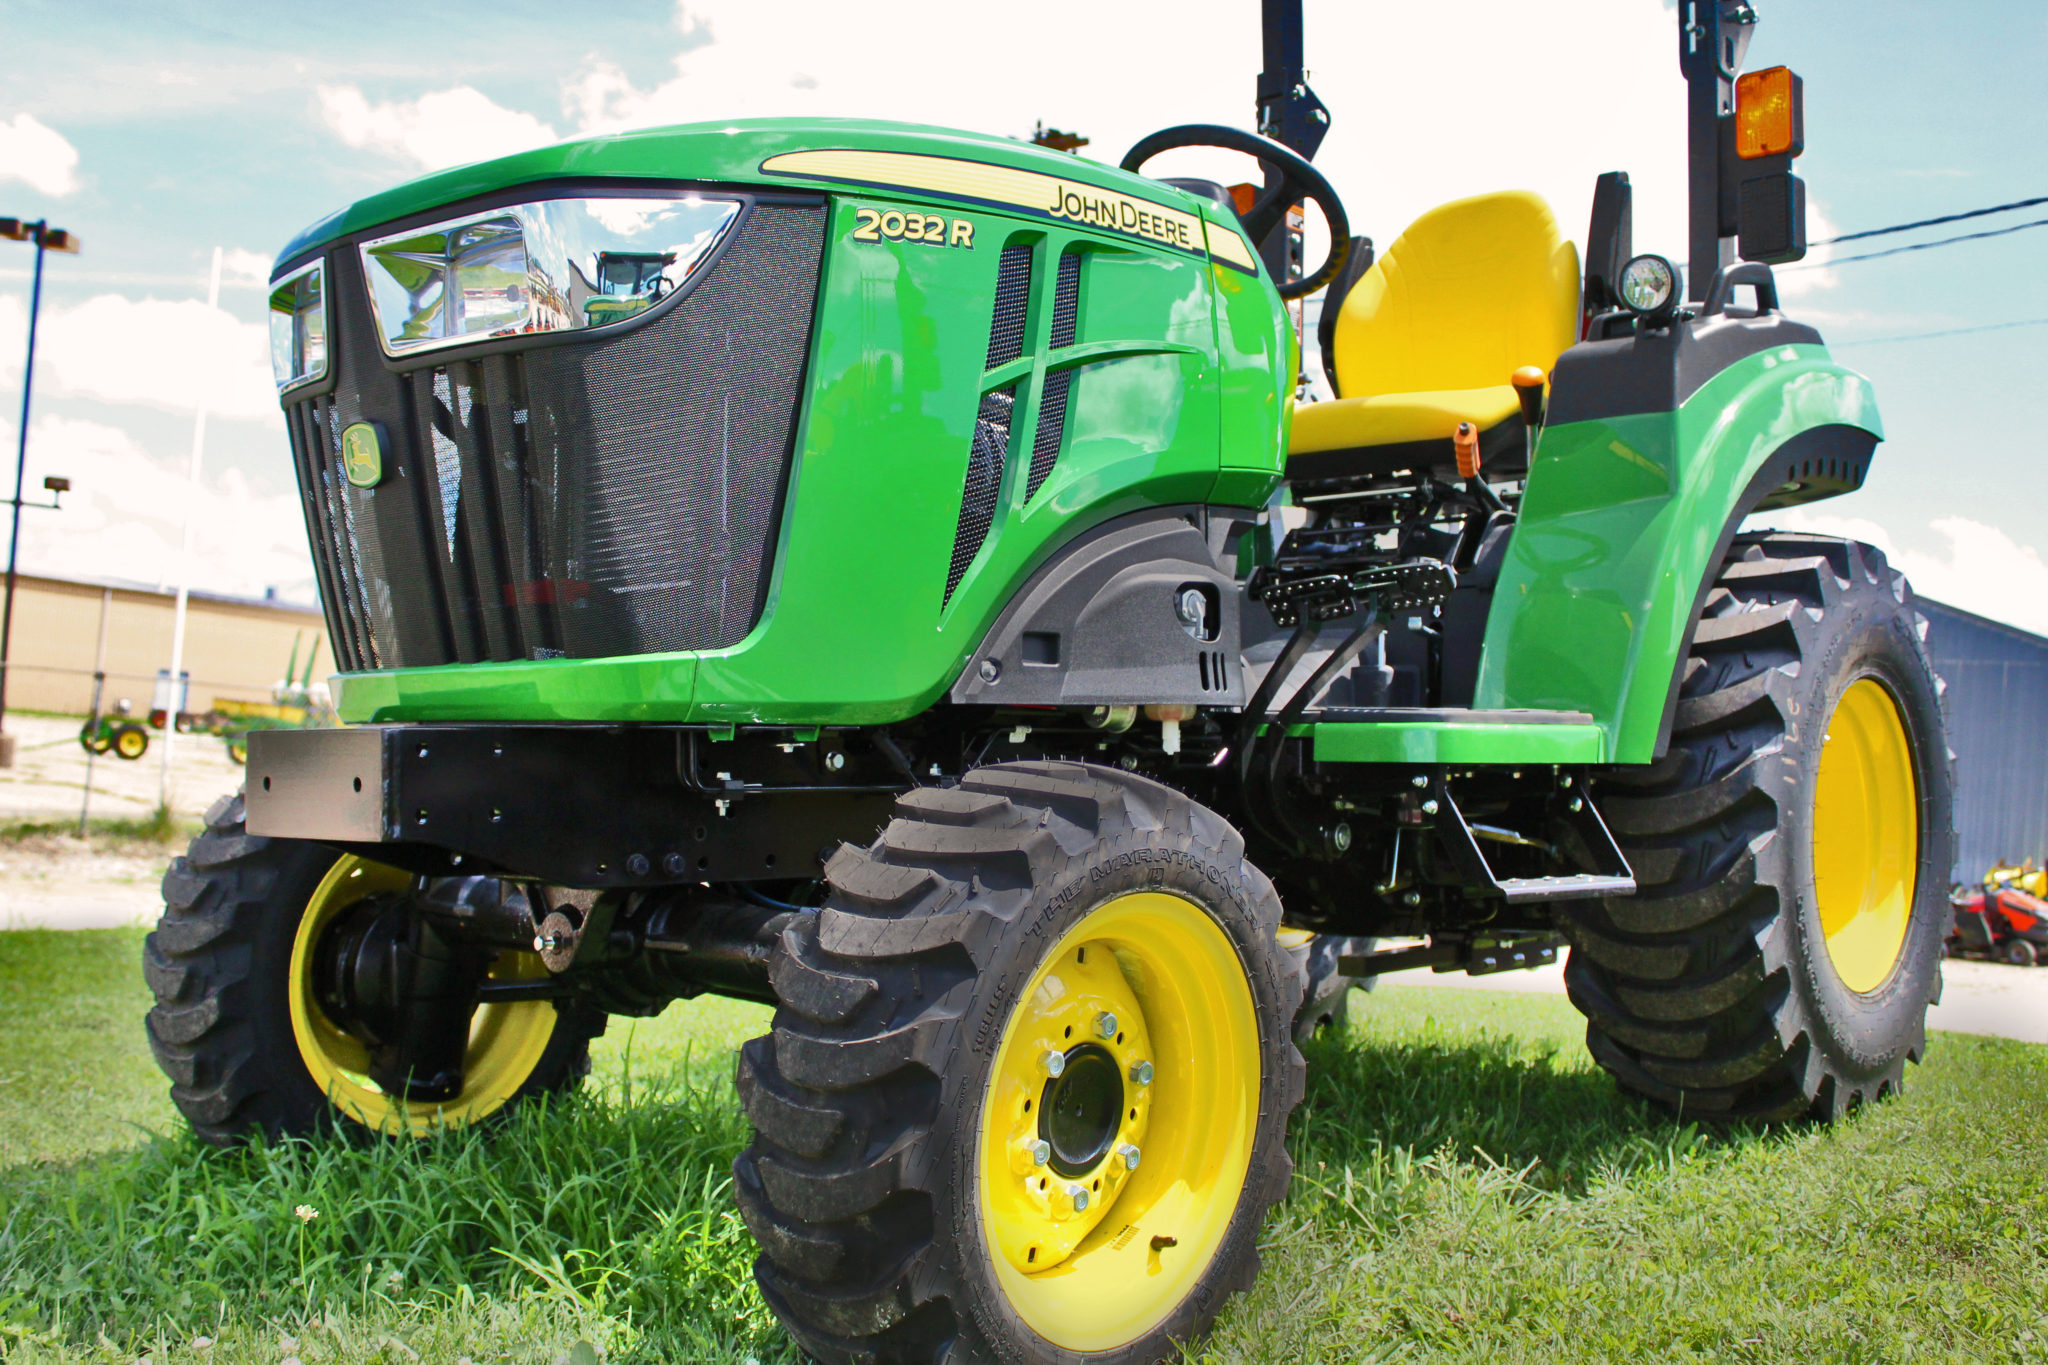 2020-john-deere-2032r-compact-utility-tractor-t-h-e-company